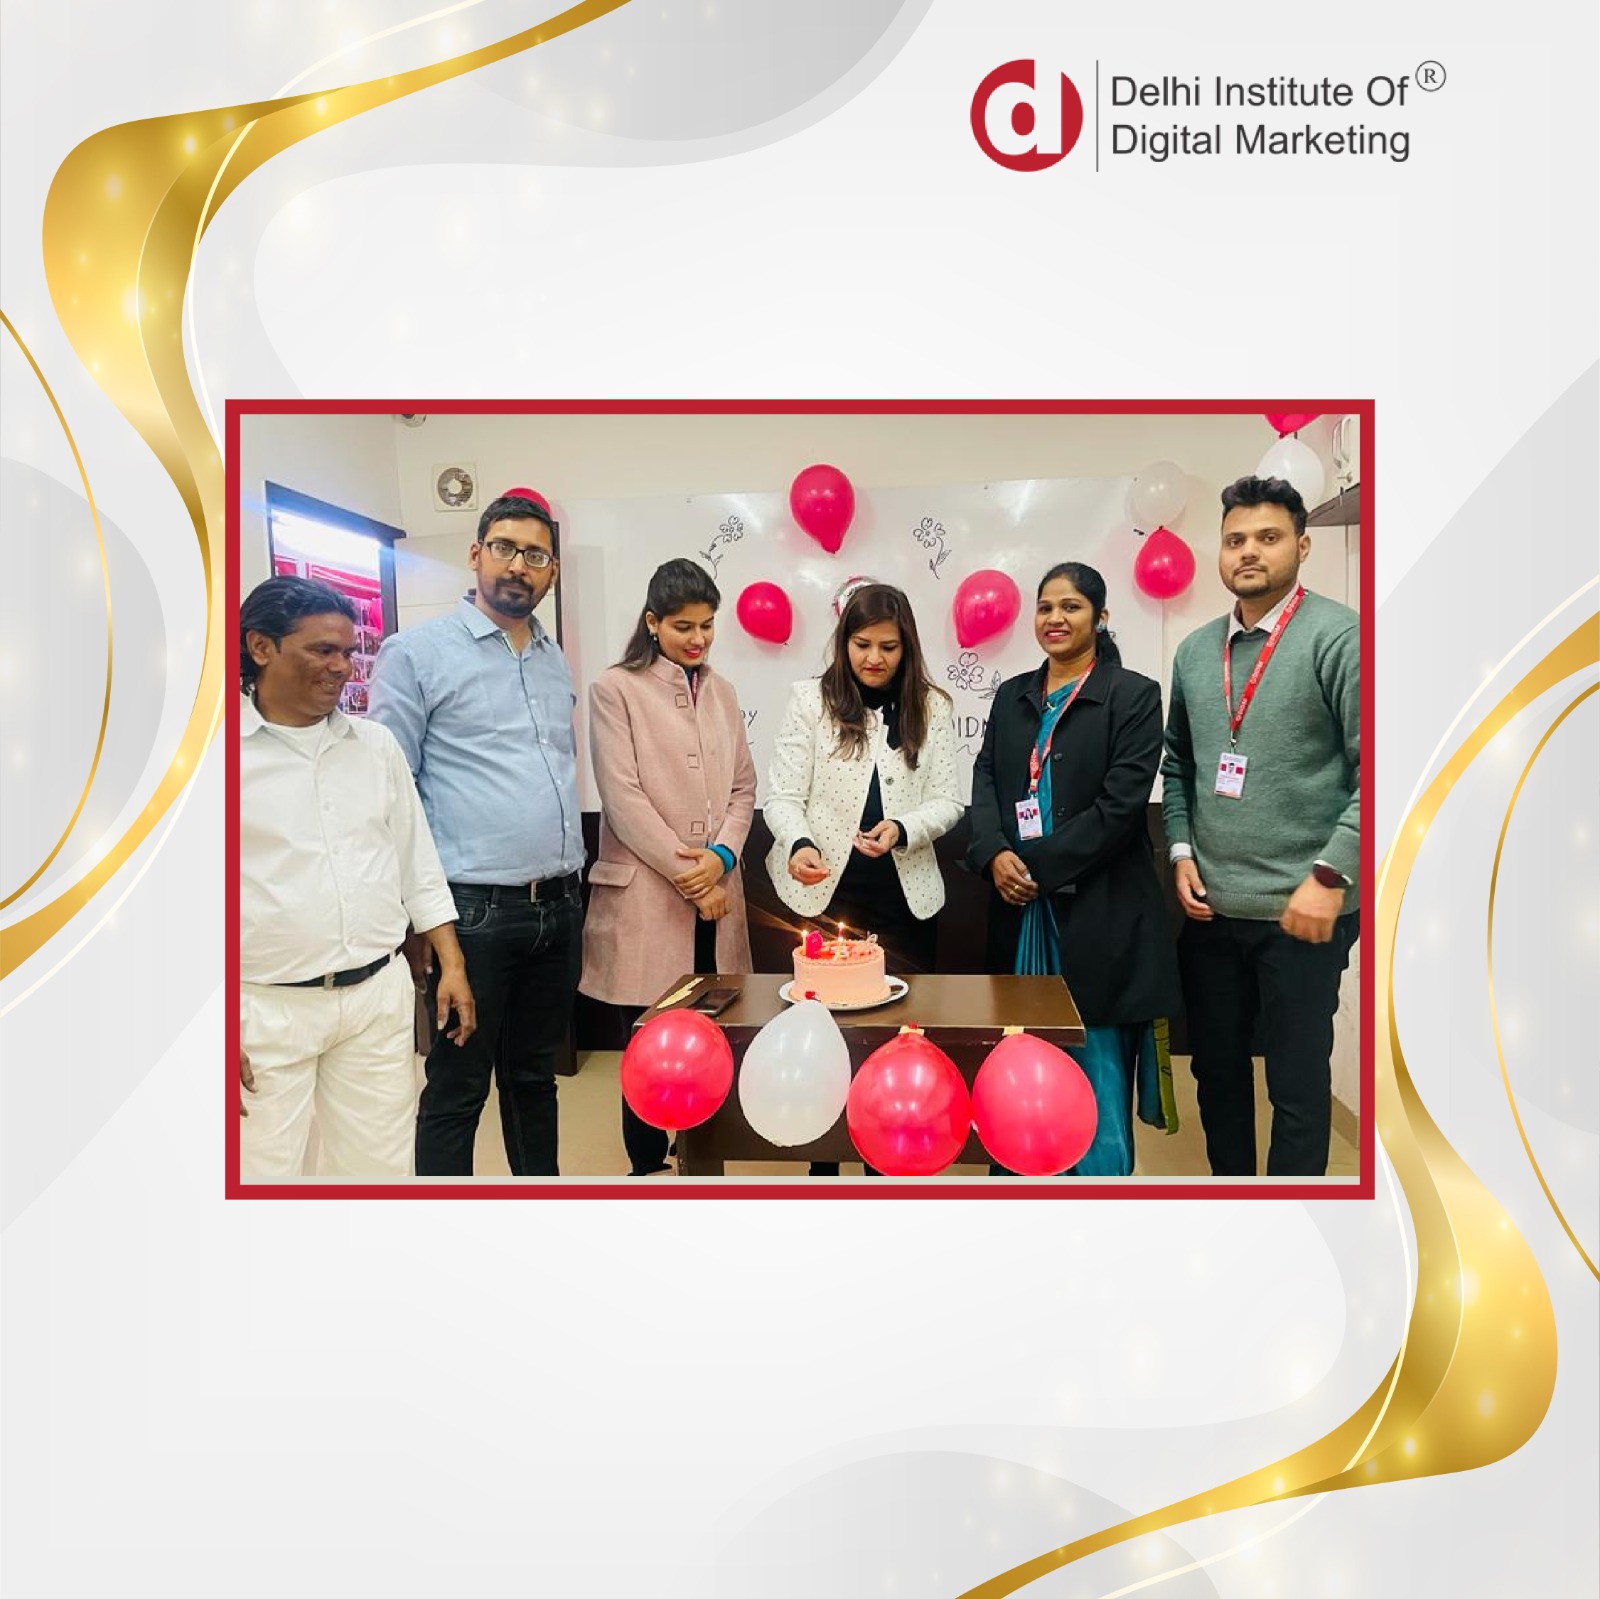 DIDM’s Satya Niketan Branch Celebrates Its Ninth Anniversary